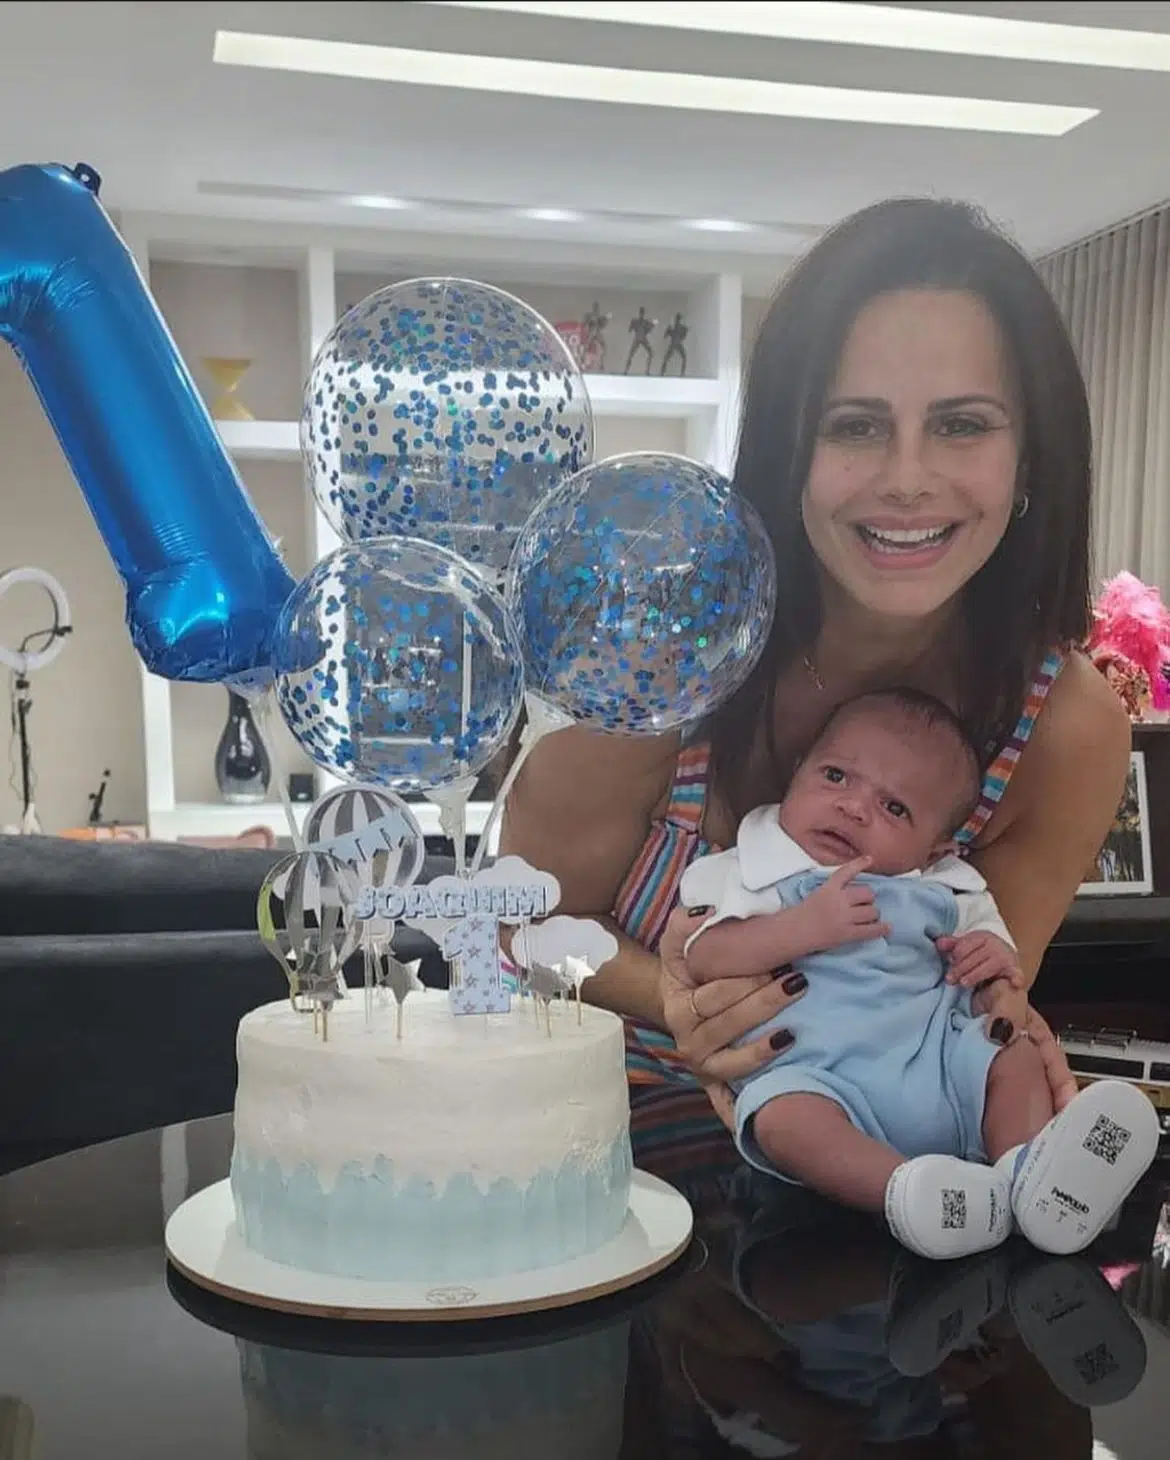 Viviane Araújo posa com seu bebê na festa na cobertura